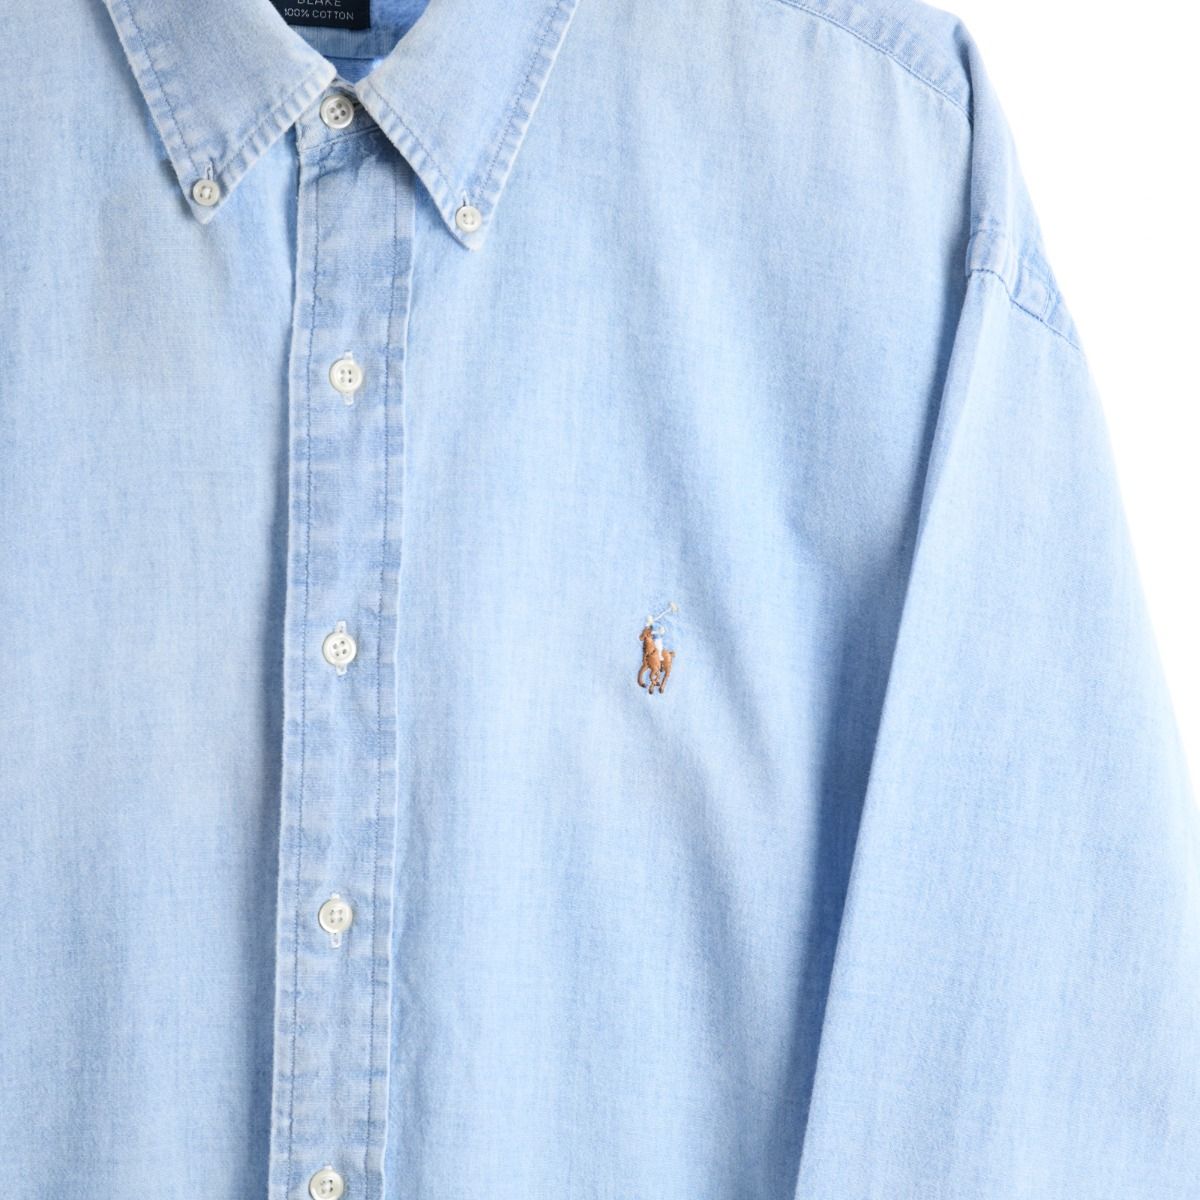 Ralph Lauren Blake Shirt in Washed Blue